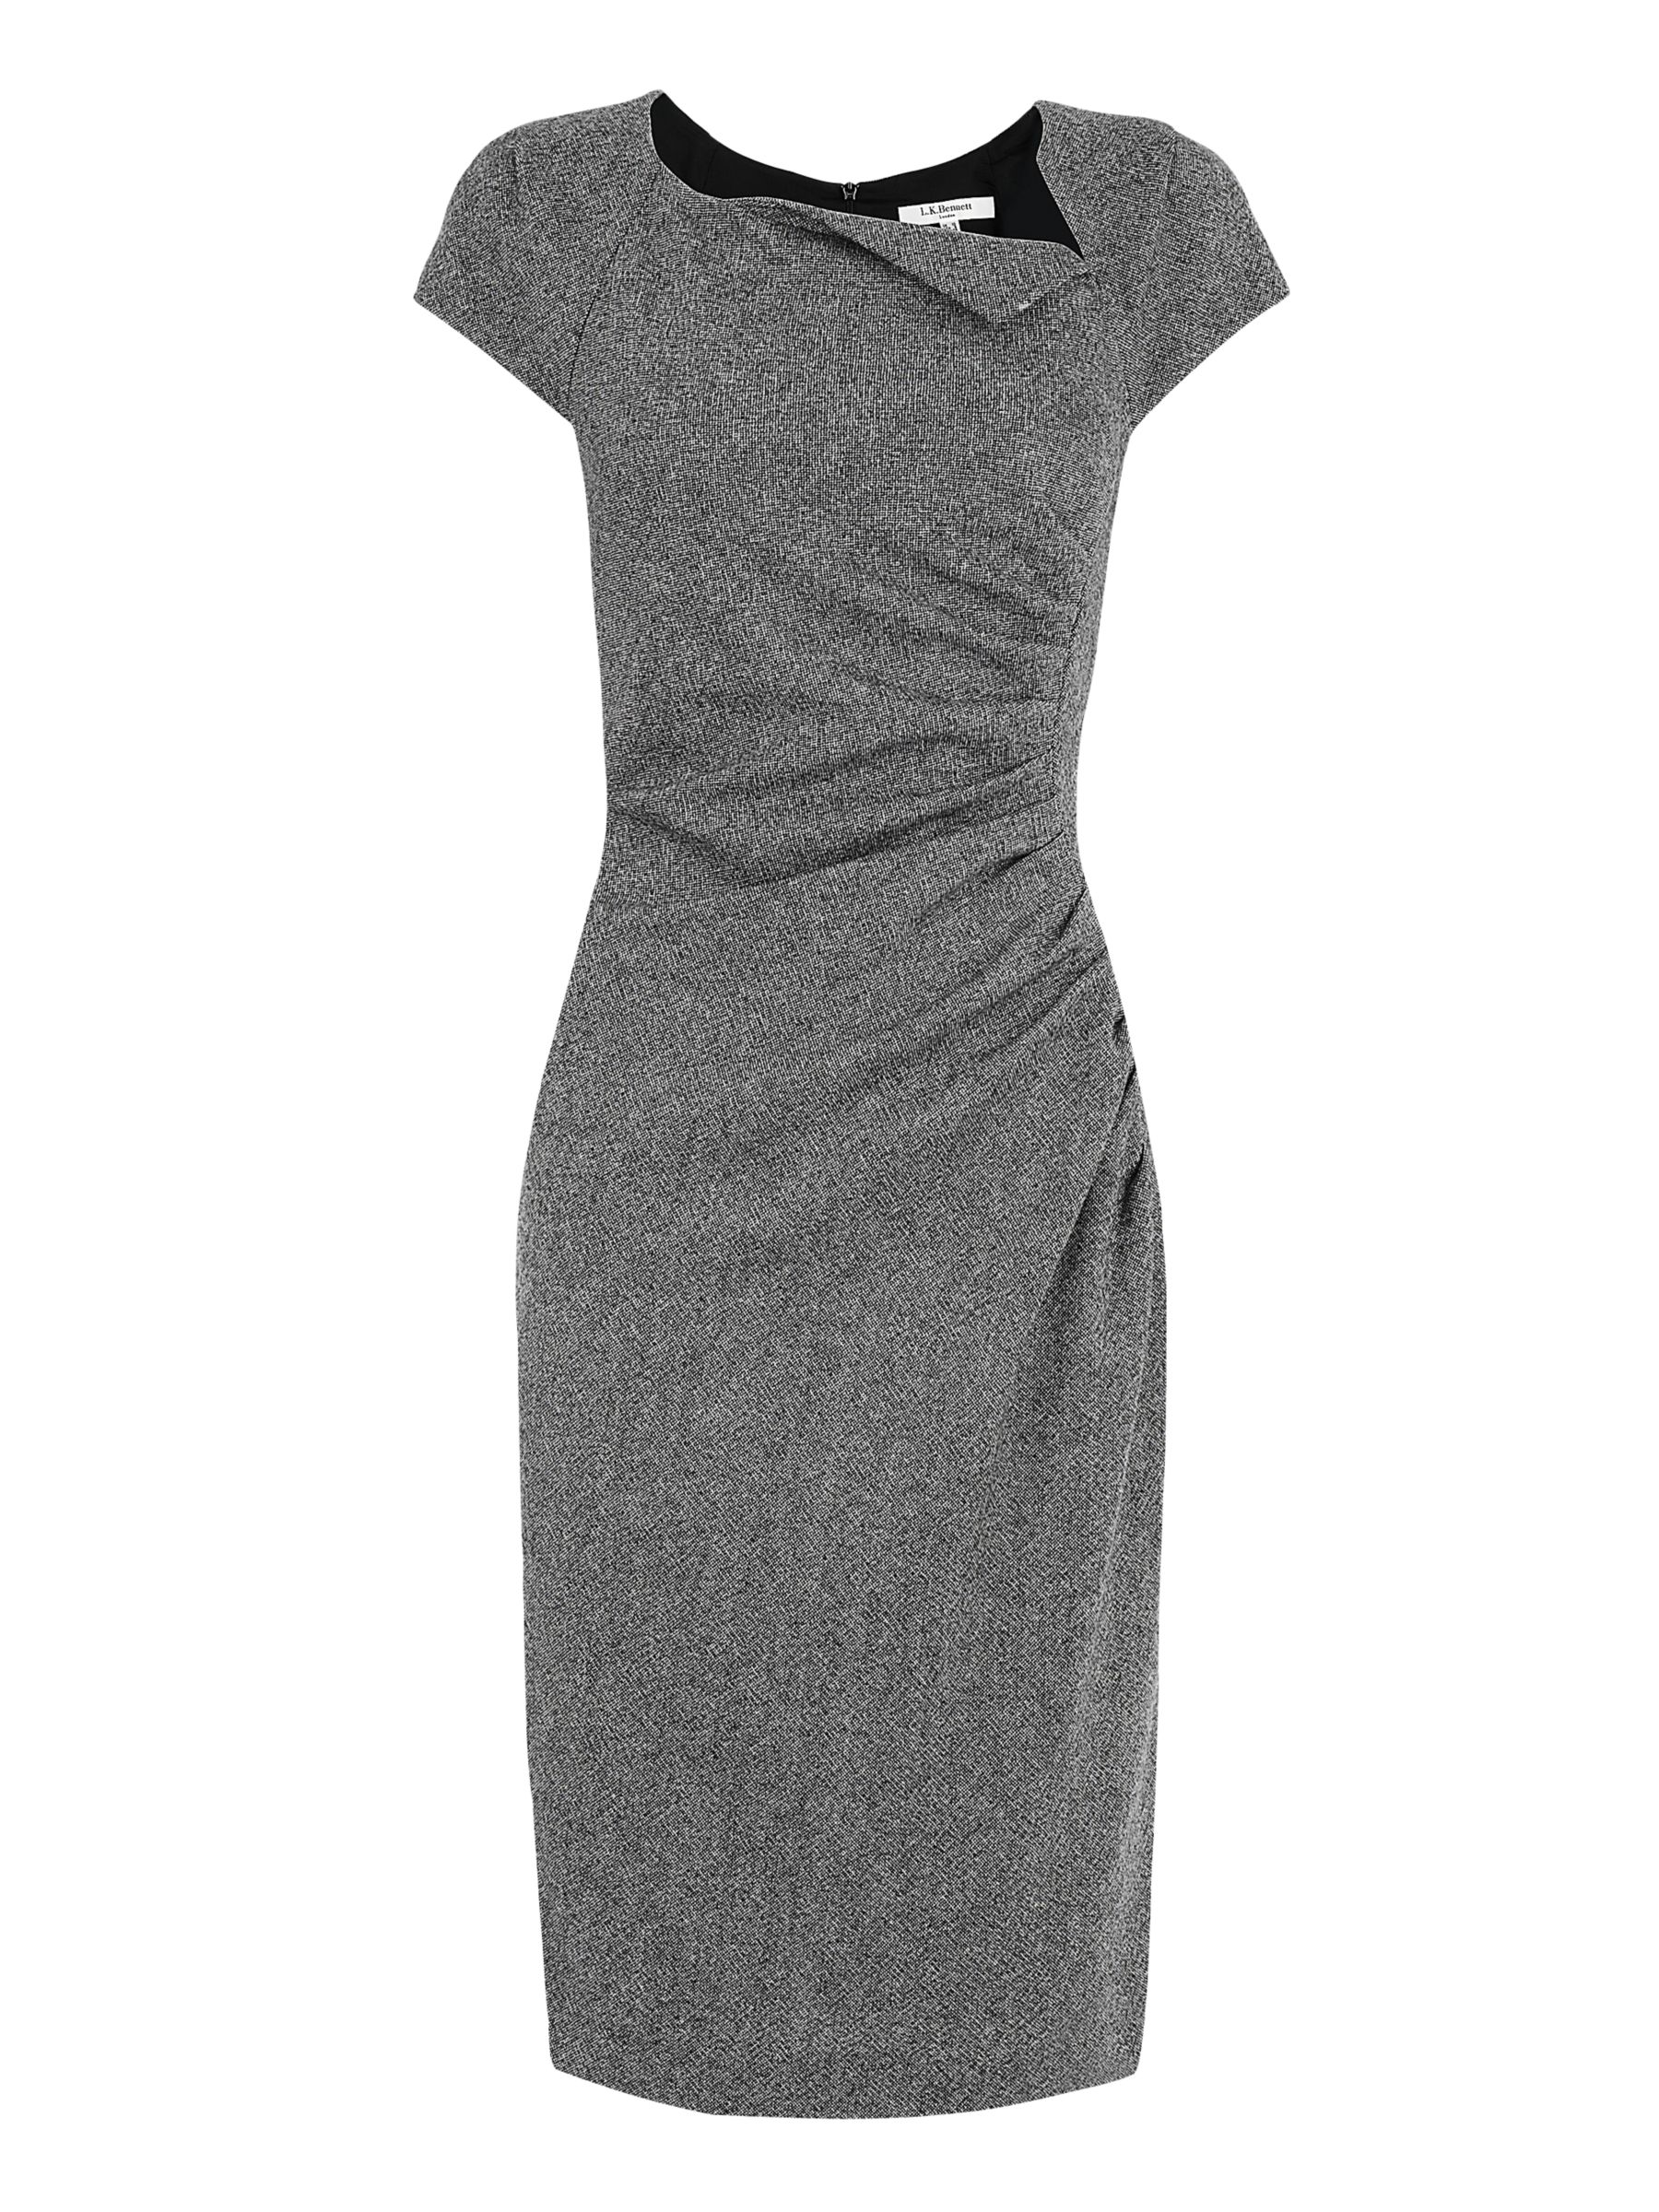 L.K.Bennett Davina Wool City Dress, Grey at John Lewis